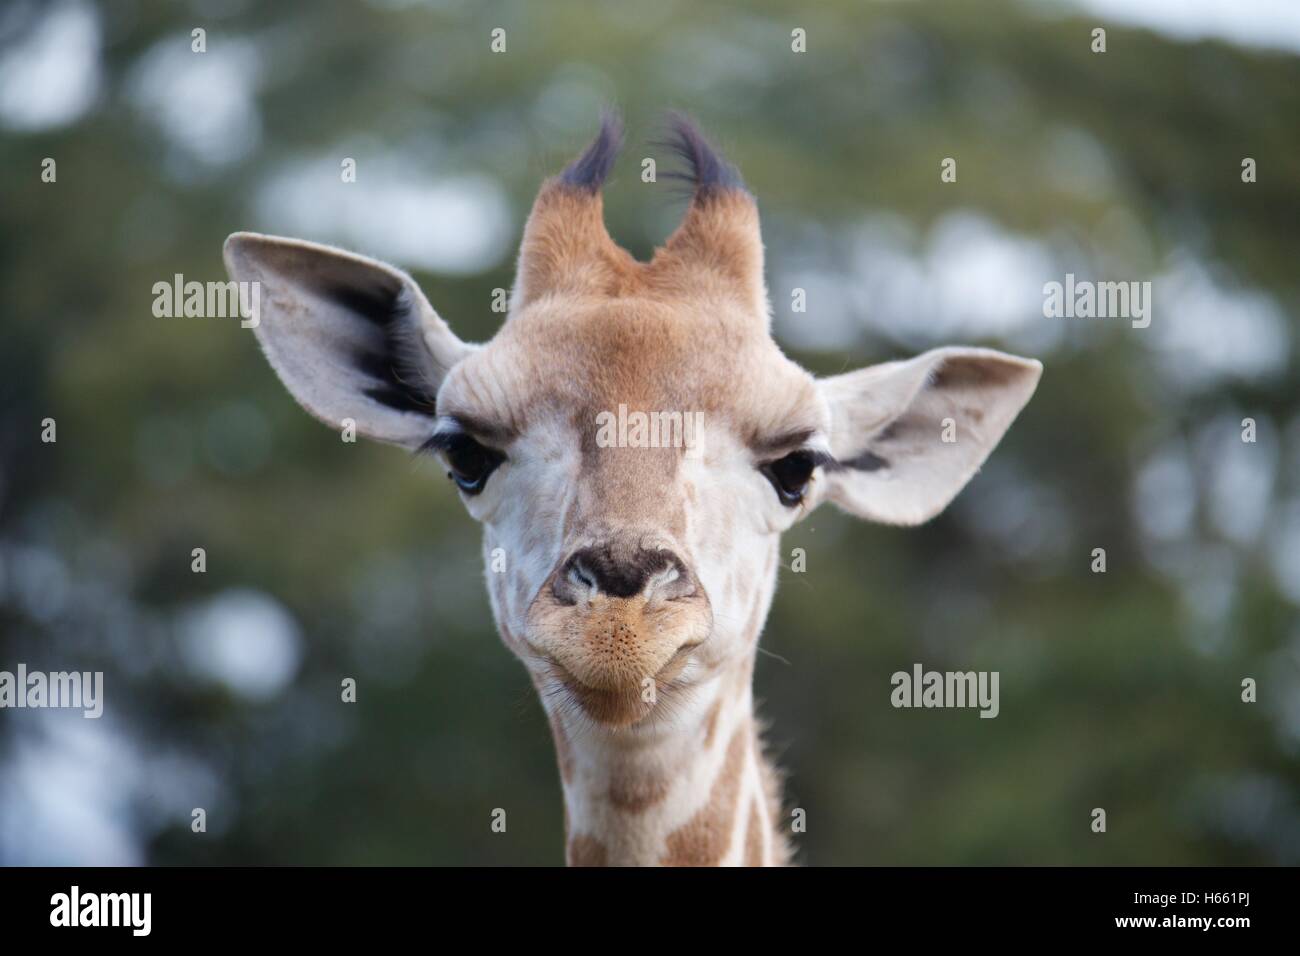 Baby giraffe portrait, Kenya Stock Photo